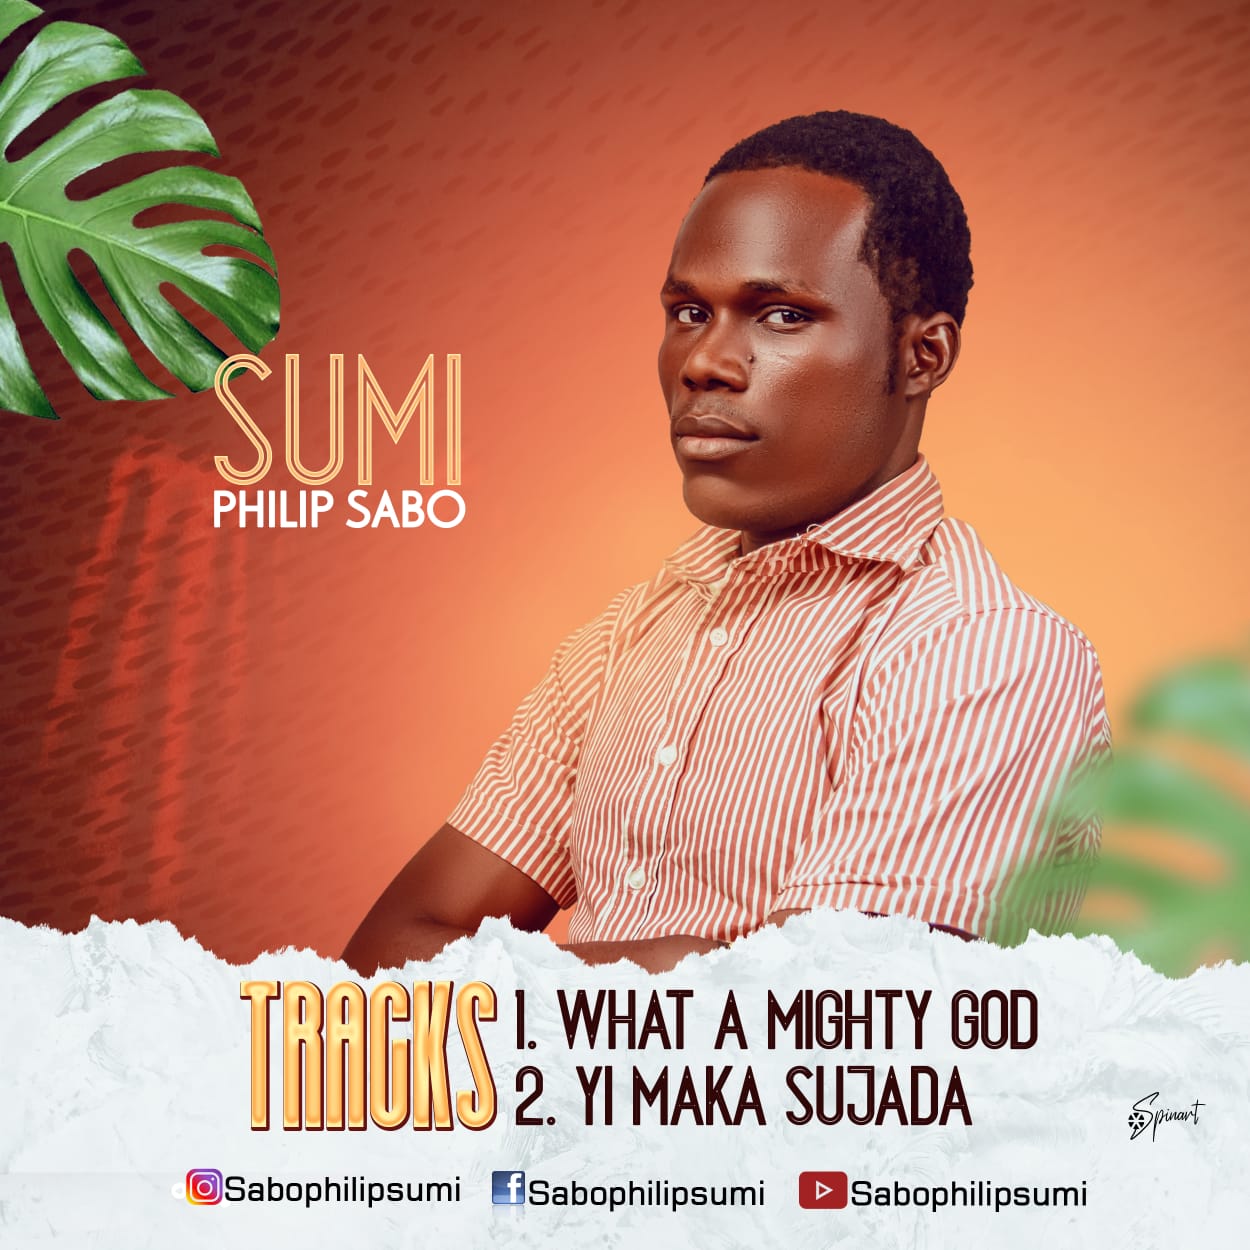 [2 tracks] Sumi Philip Sabo - What a mighty God + Yi maka Sujada